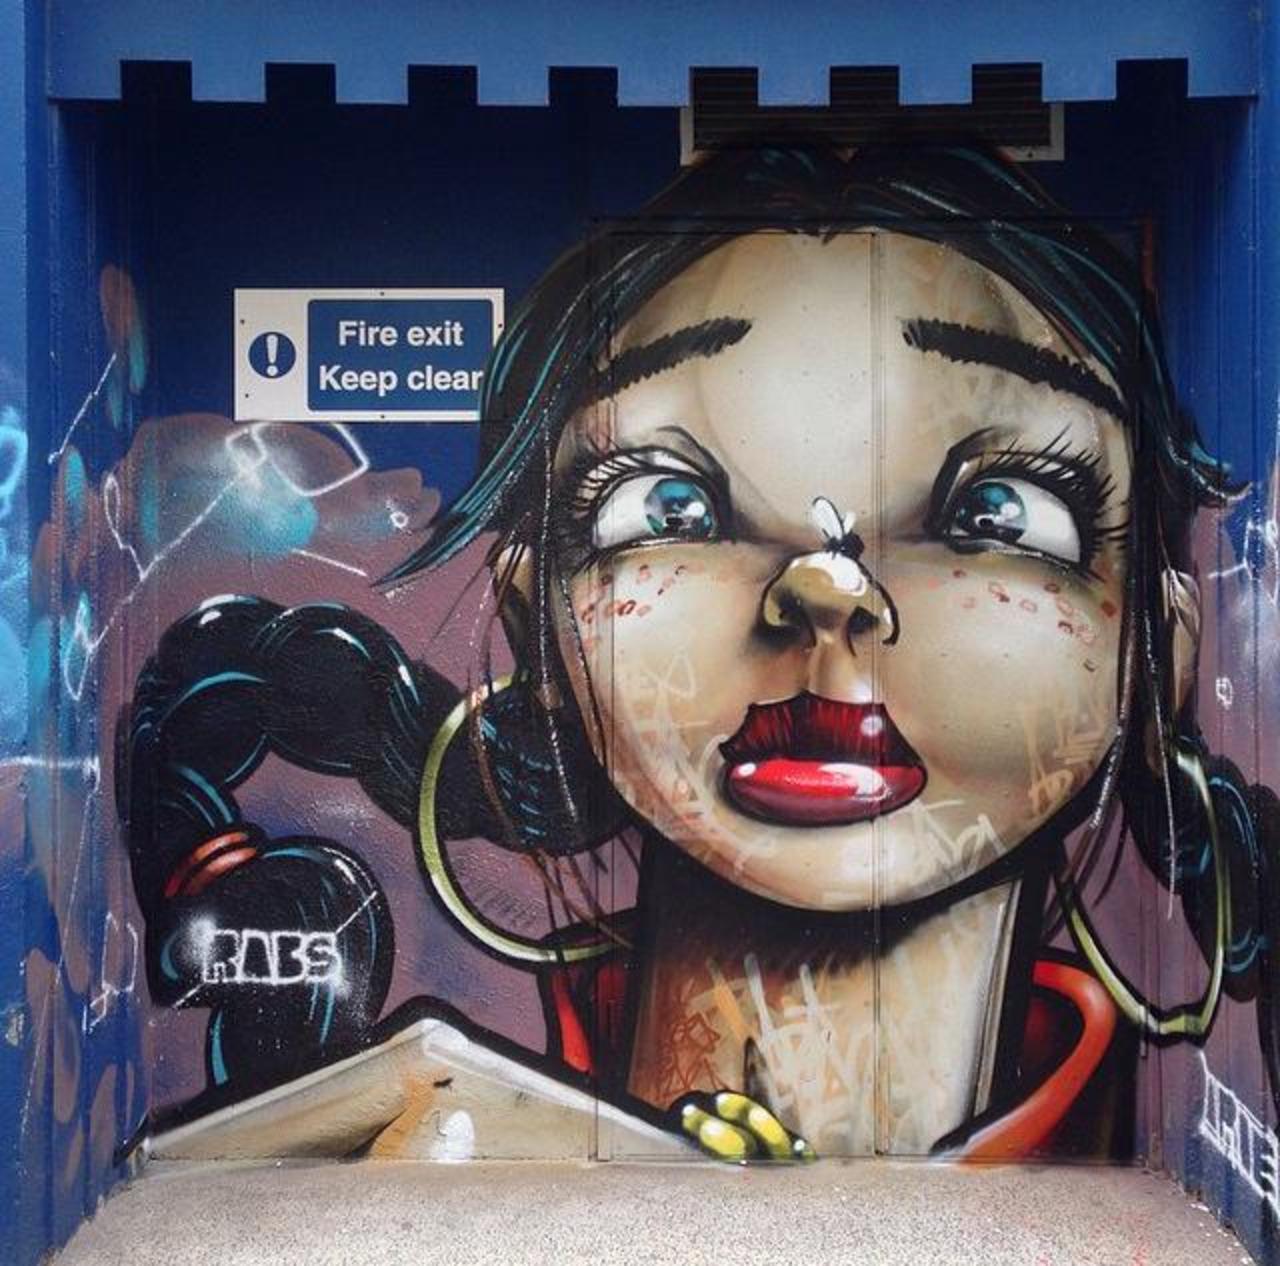 New Street Art piece by • aroe_msk 

#art #arte #graffiti #streetart http://t.co/QF1pHpM6xl